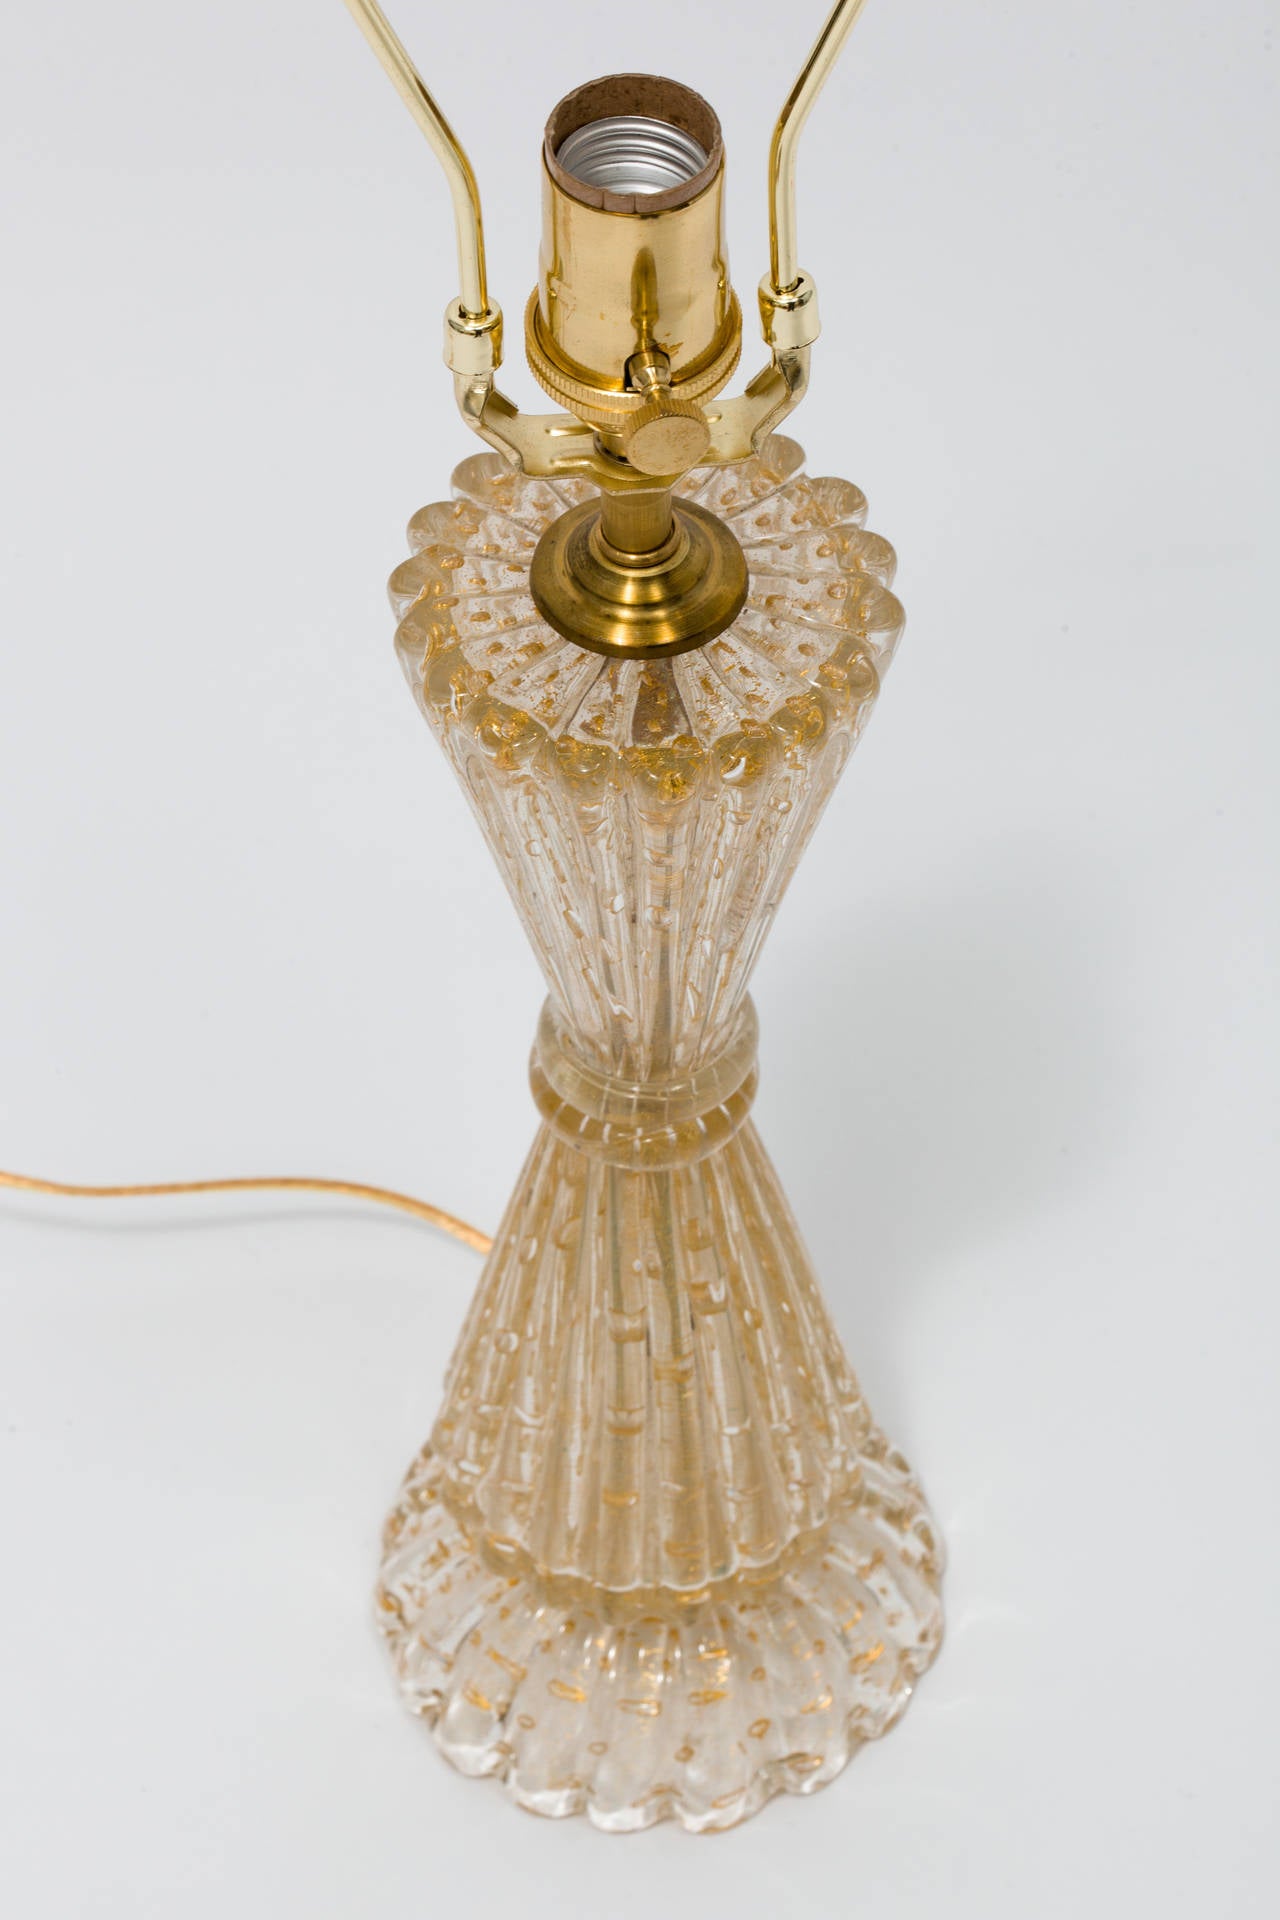 Petite Murano glass lamp in the style of Barovier & Toso. Handblown glass 